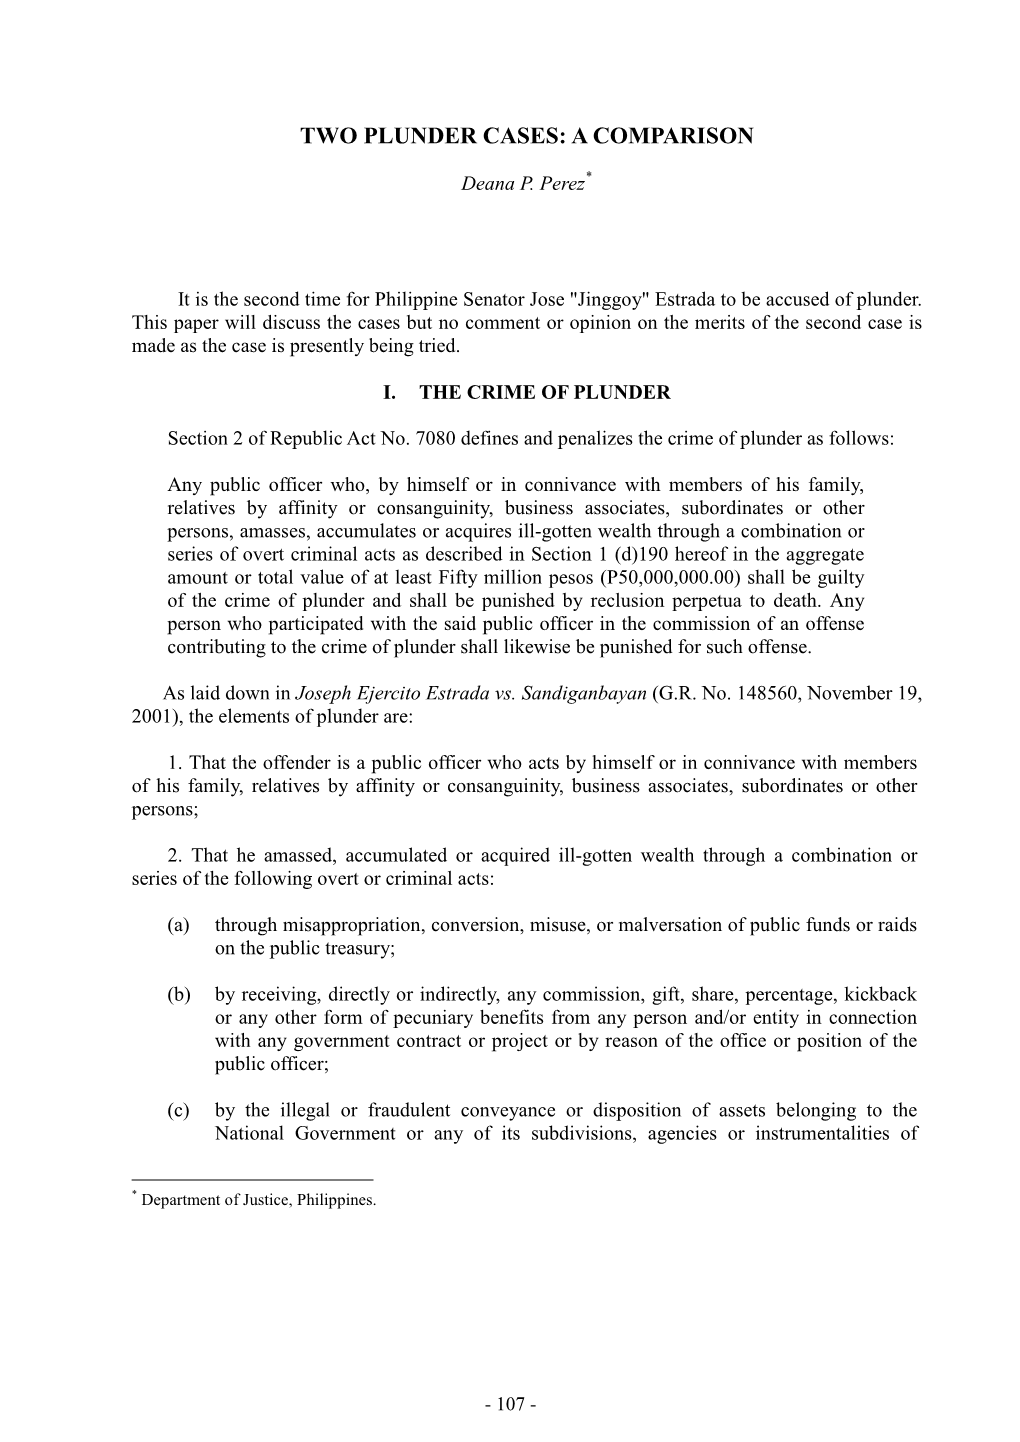 Philippines, Department of Justice (PDF: 256KB)